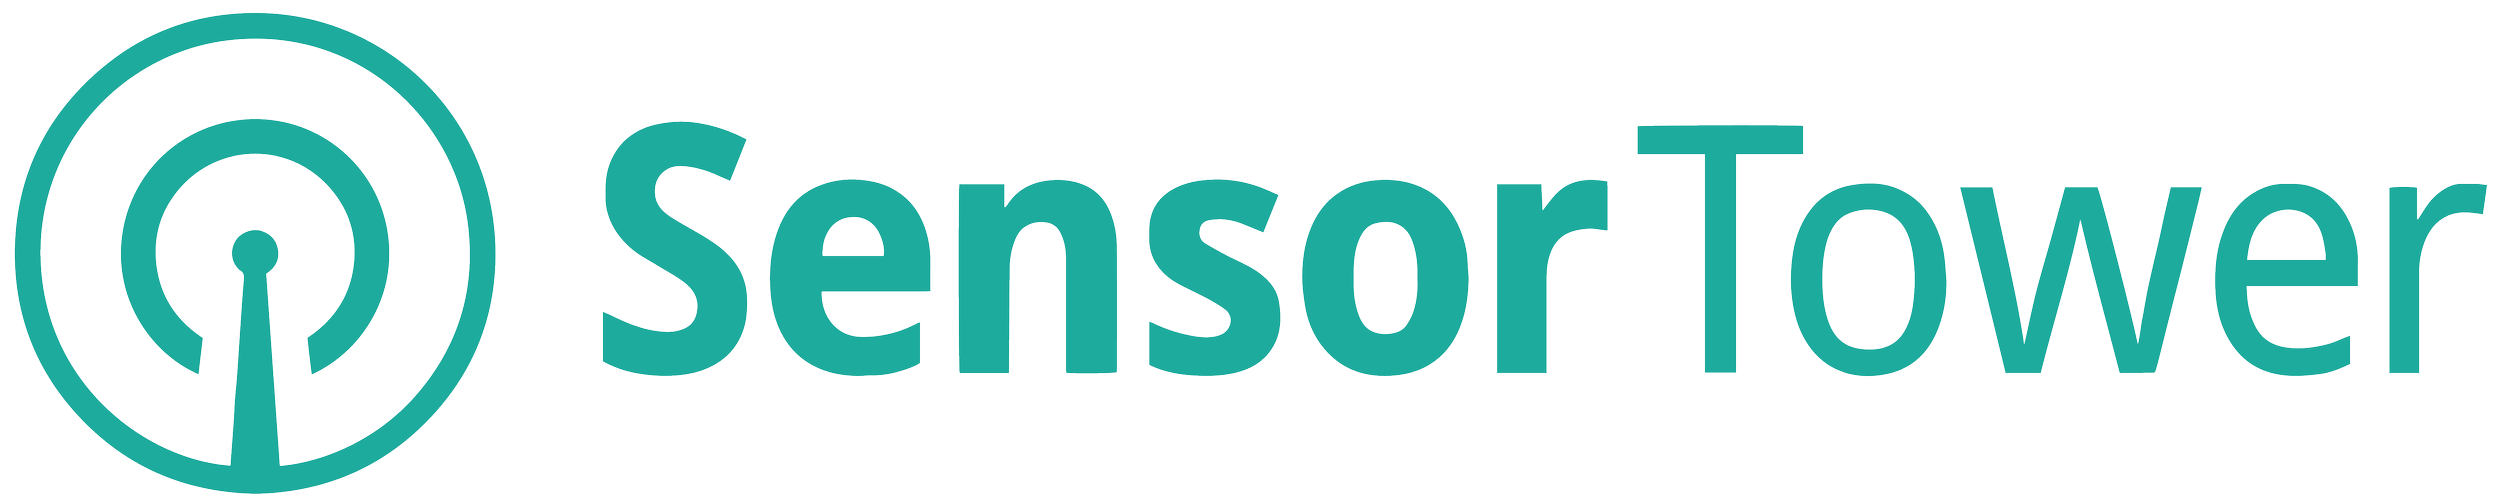 sensor tower logo.png